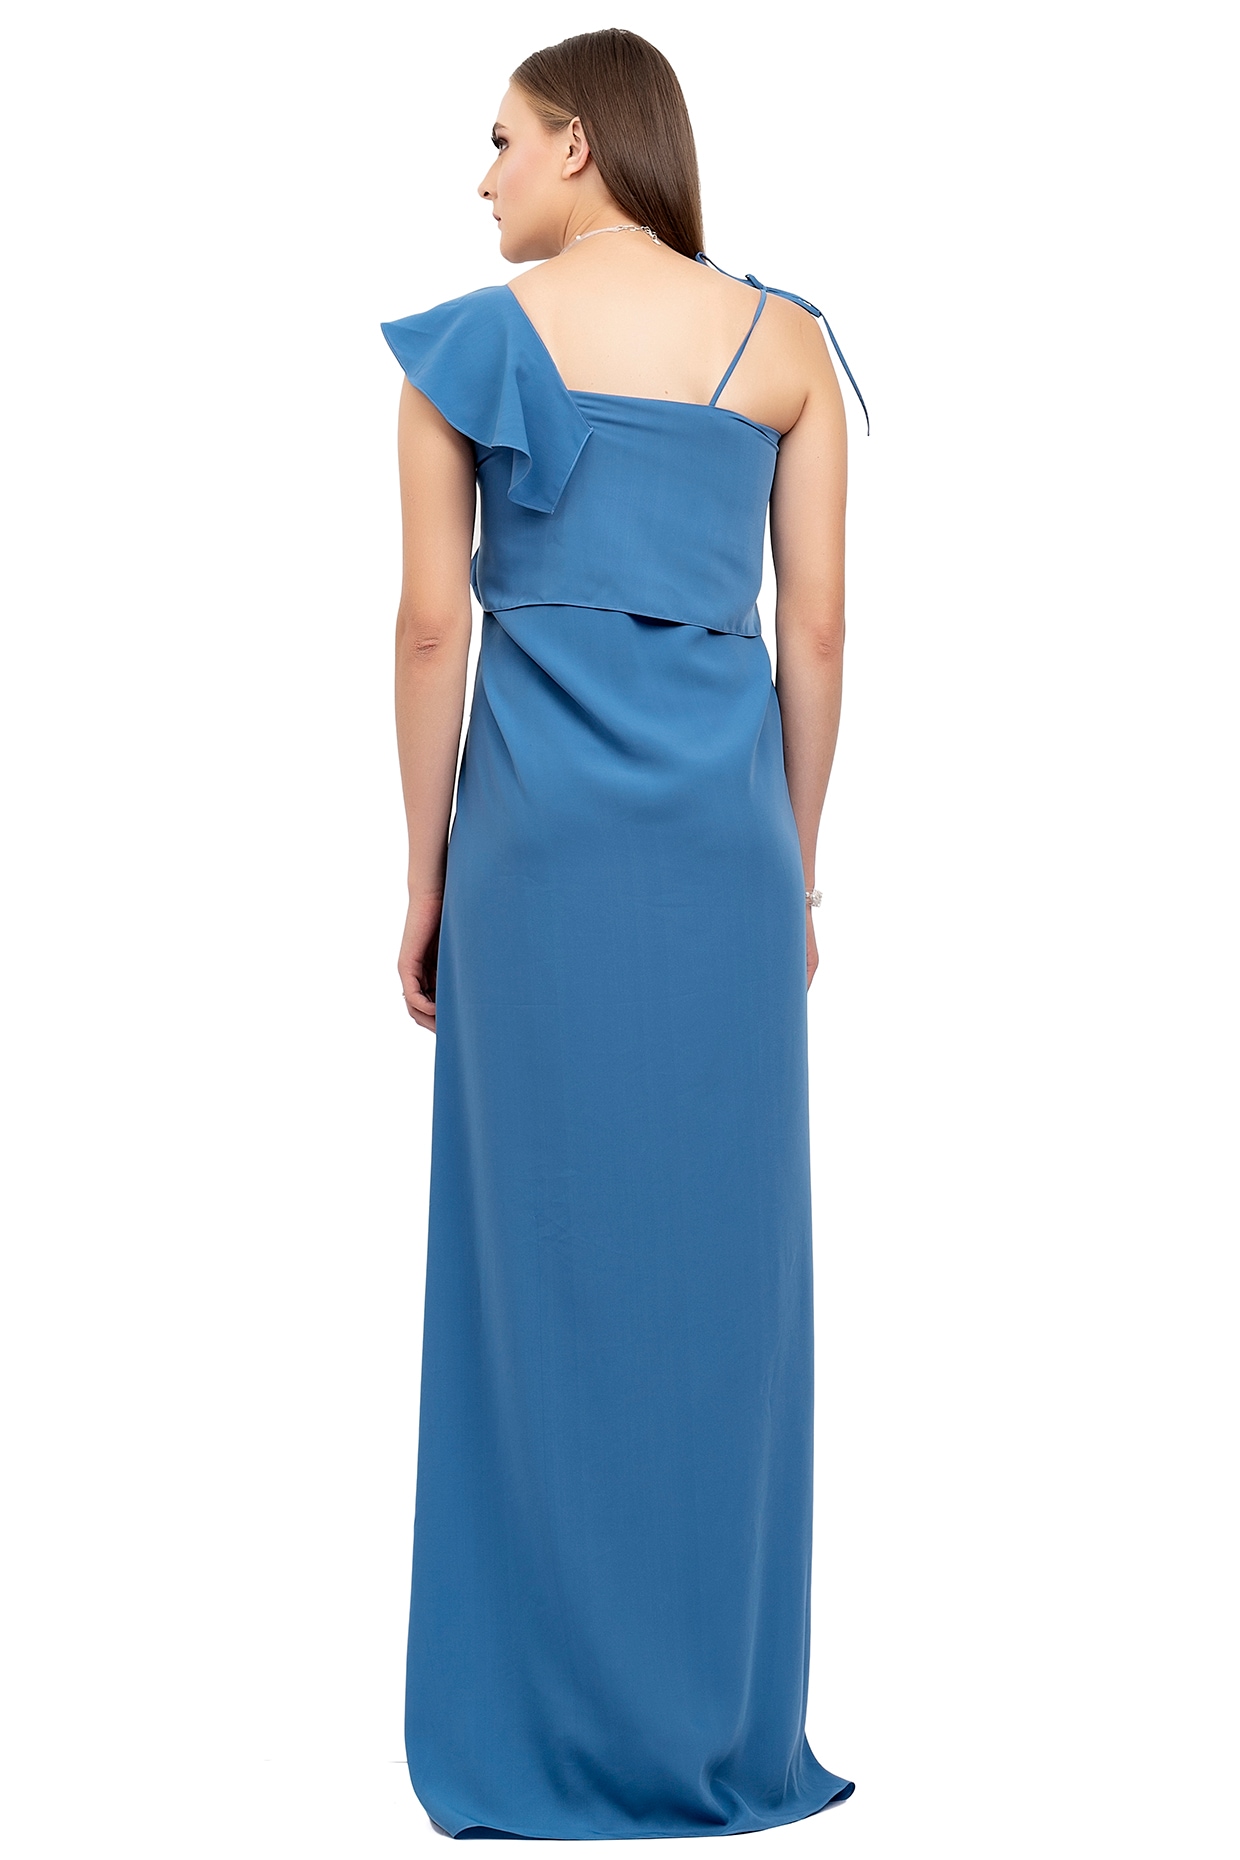 India Lace Formal Dress - PO816 - Tania Olsen Designs